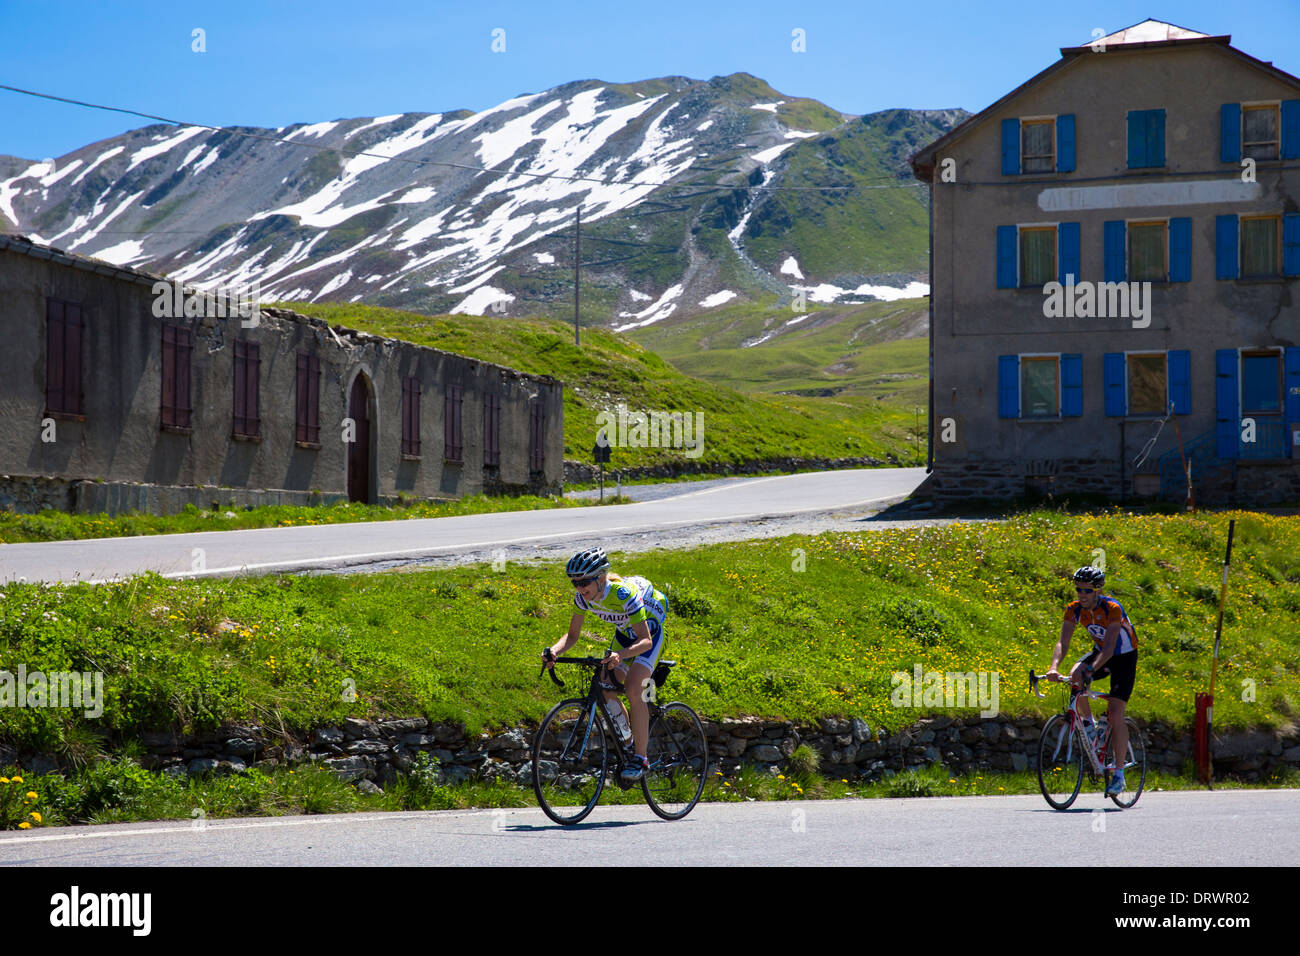 Los ciclistas montando bicicleta Scott Británico (delantero) Pinarello (detrás) en el Stelvio Pass, Passo dello Stelvio, Stilfser Joch, en Italia Foto de stock